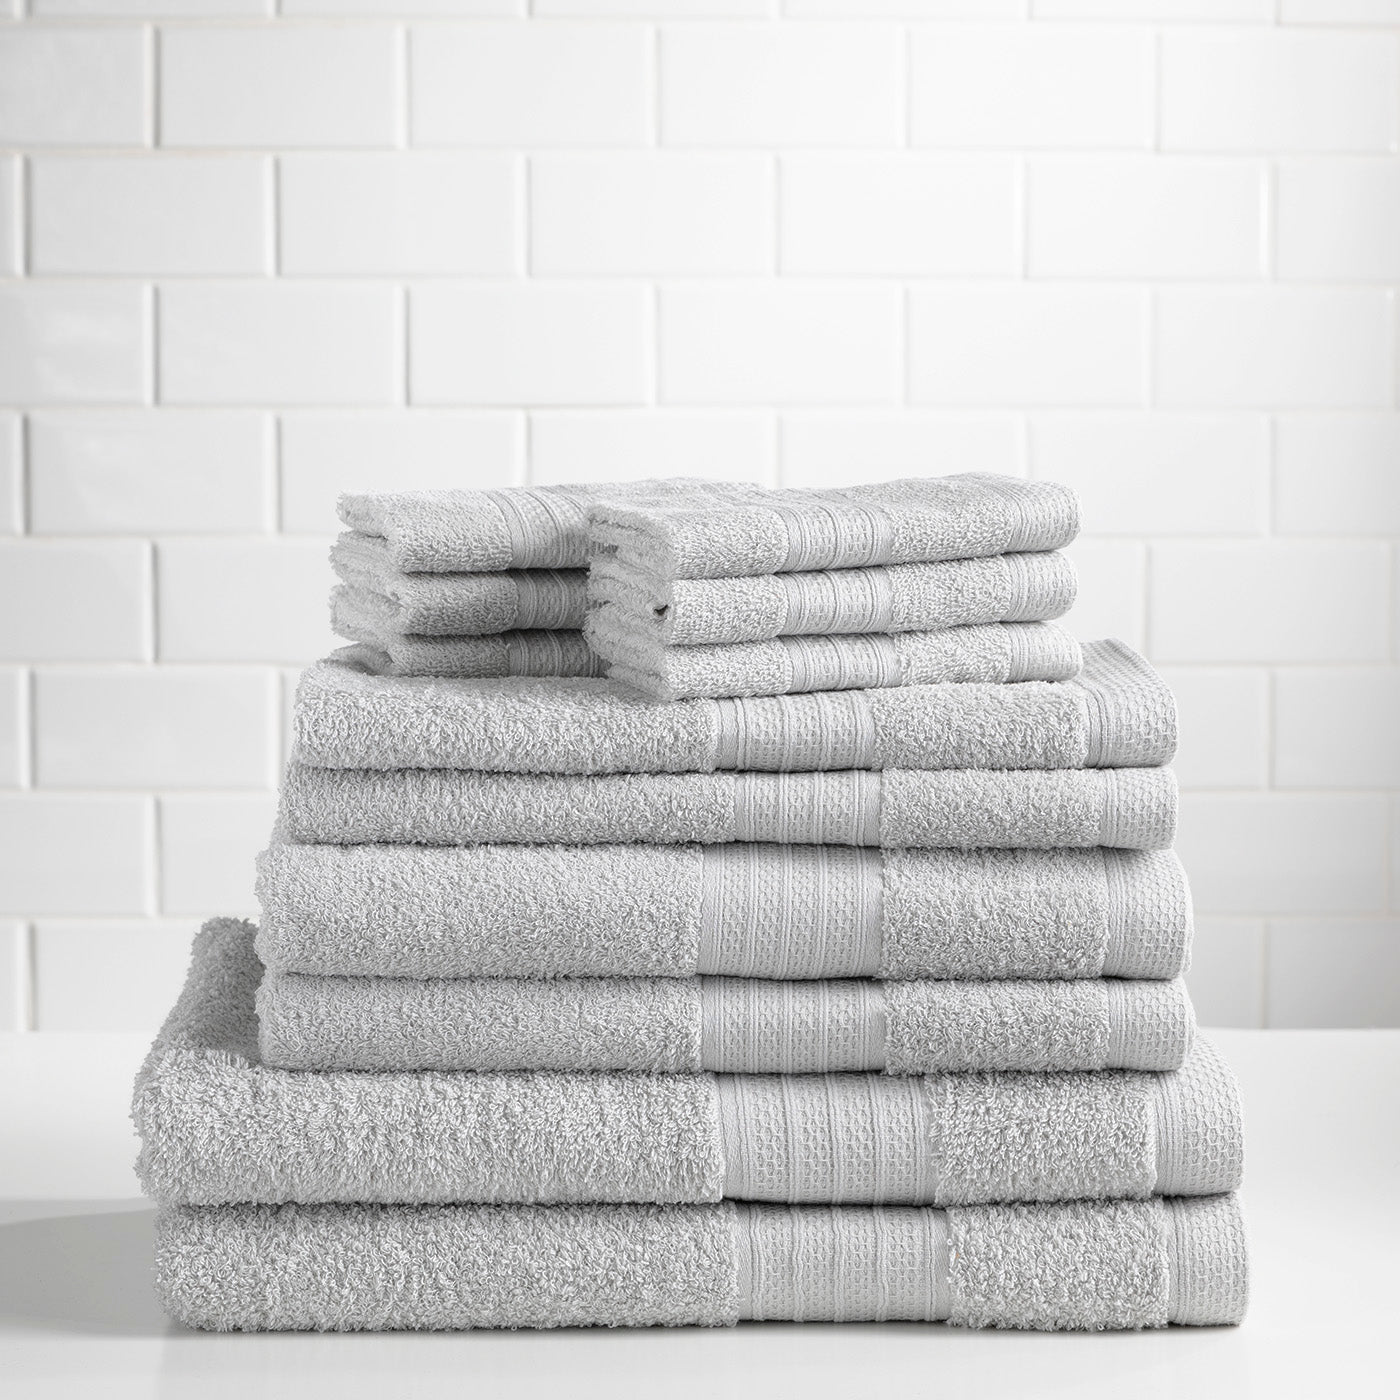 2-Piece Hotel Quality Bath Towels from Sobel Westex in 2023